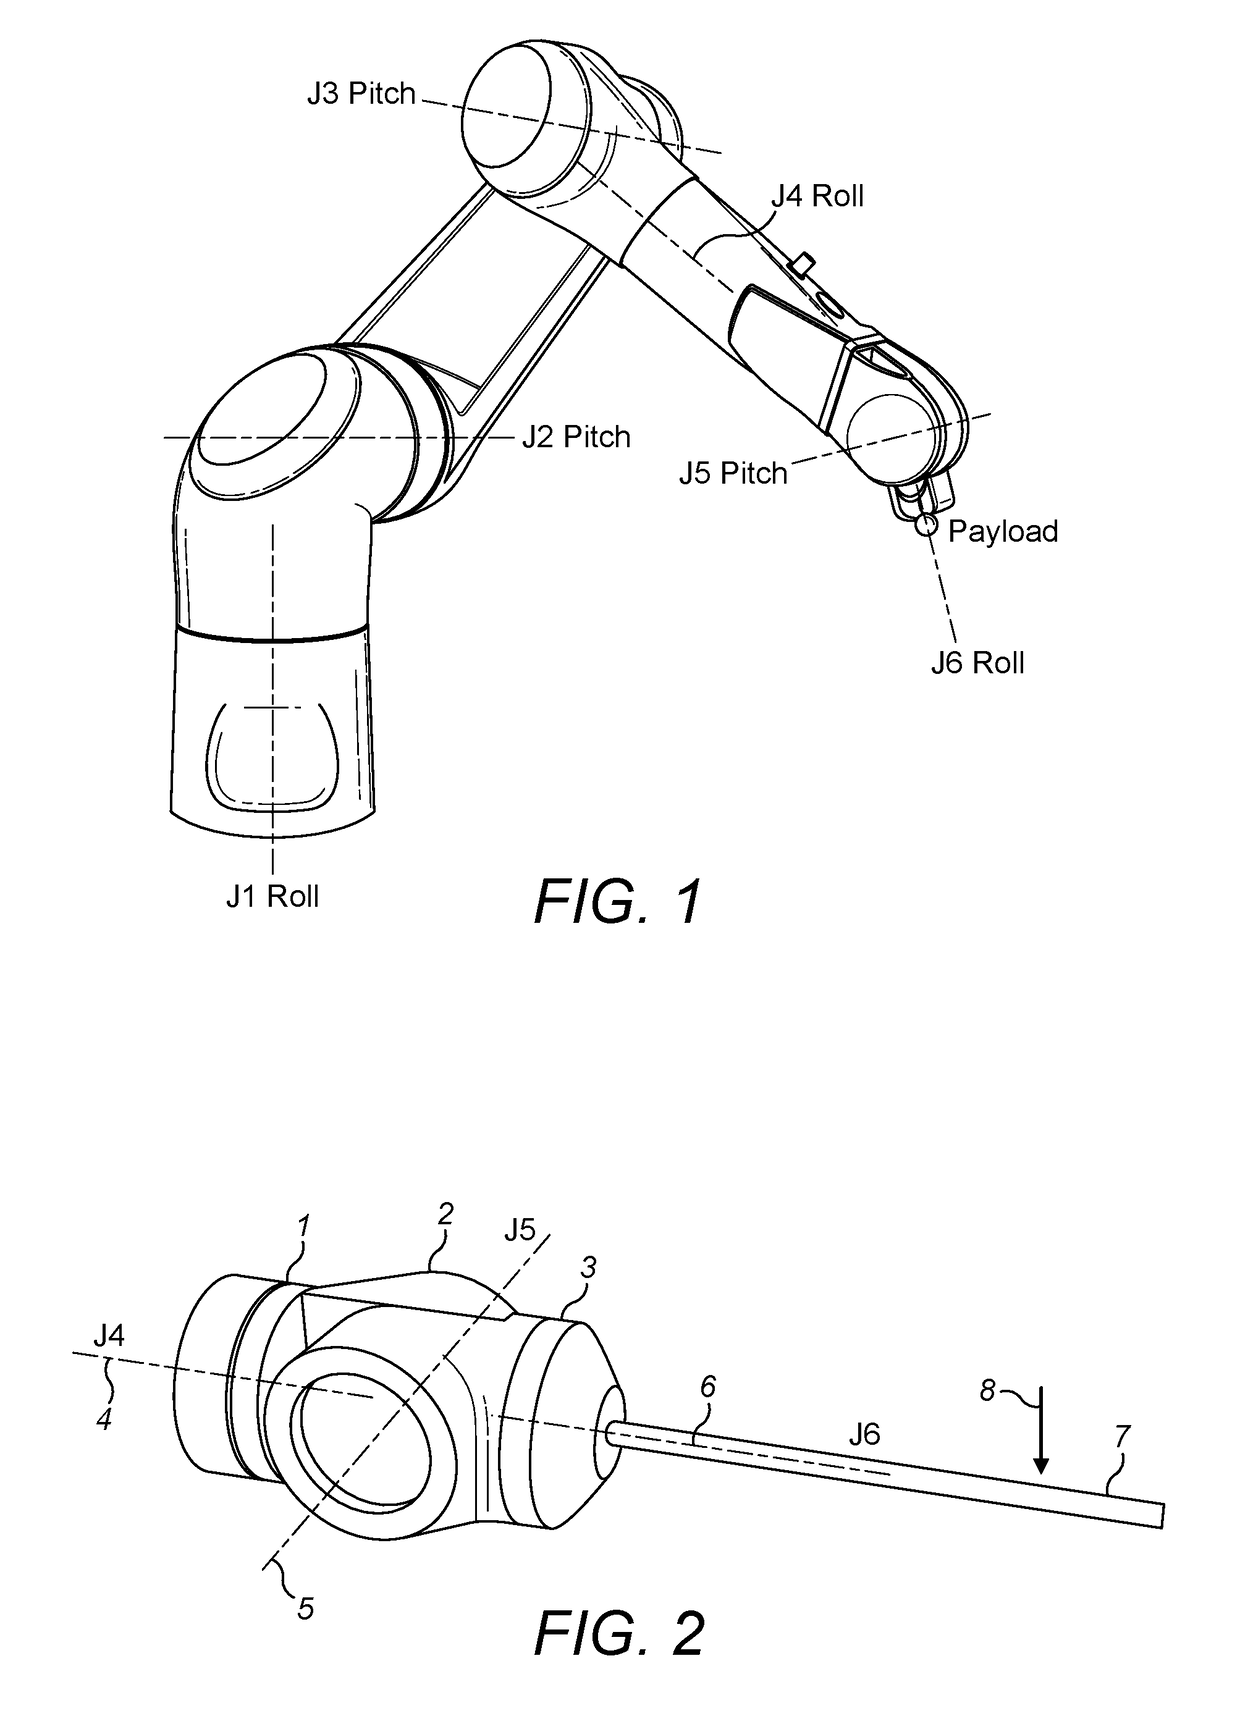 Torque sensing in a surgical robotic wrist